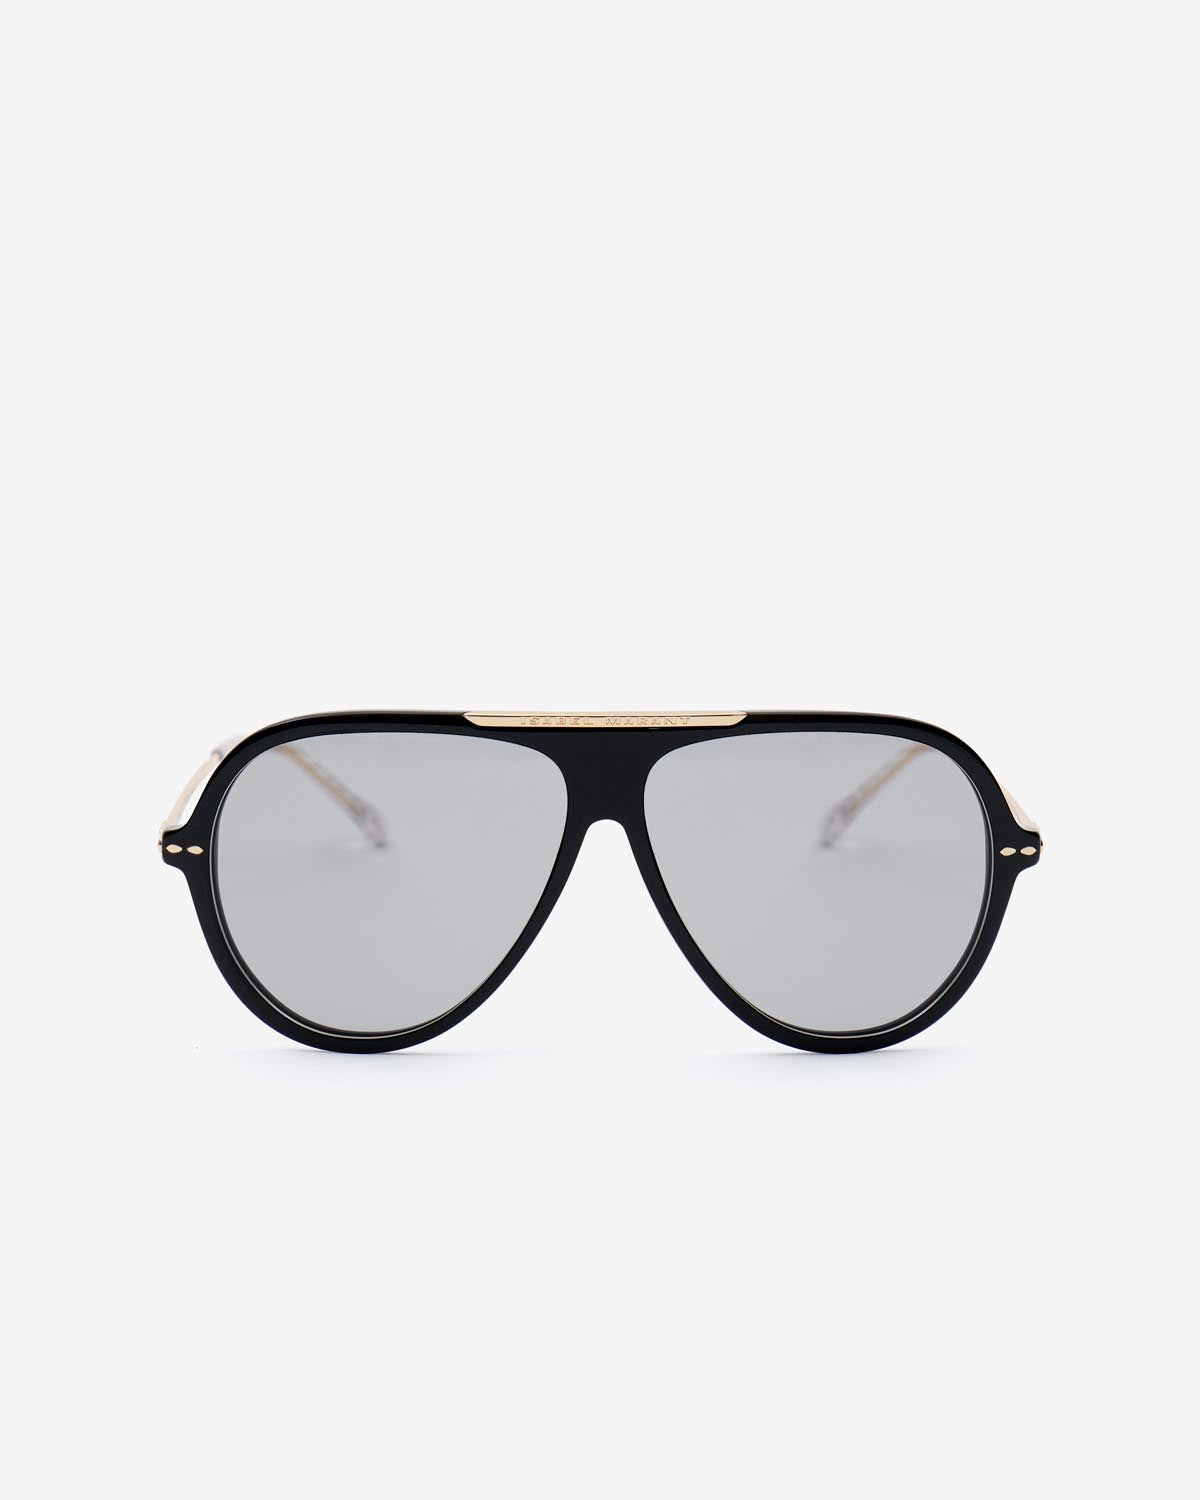 Hera sunglasses Woman Black-gray 2